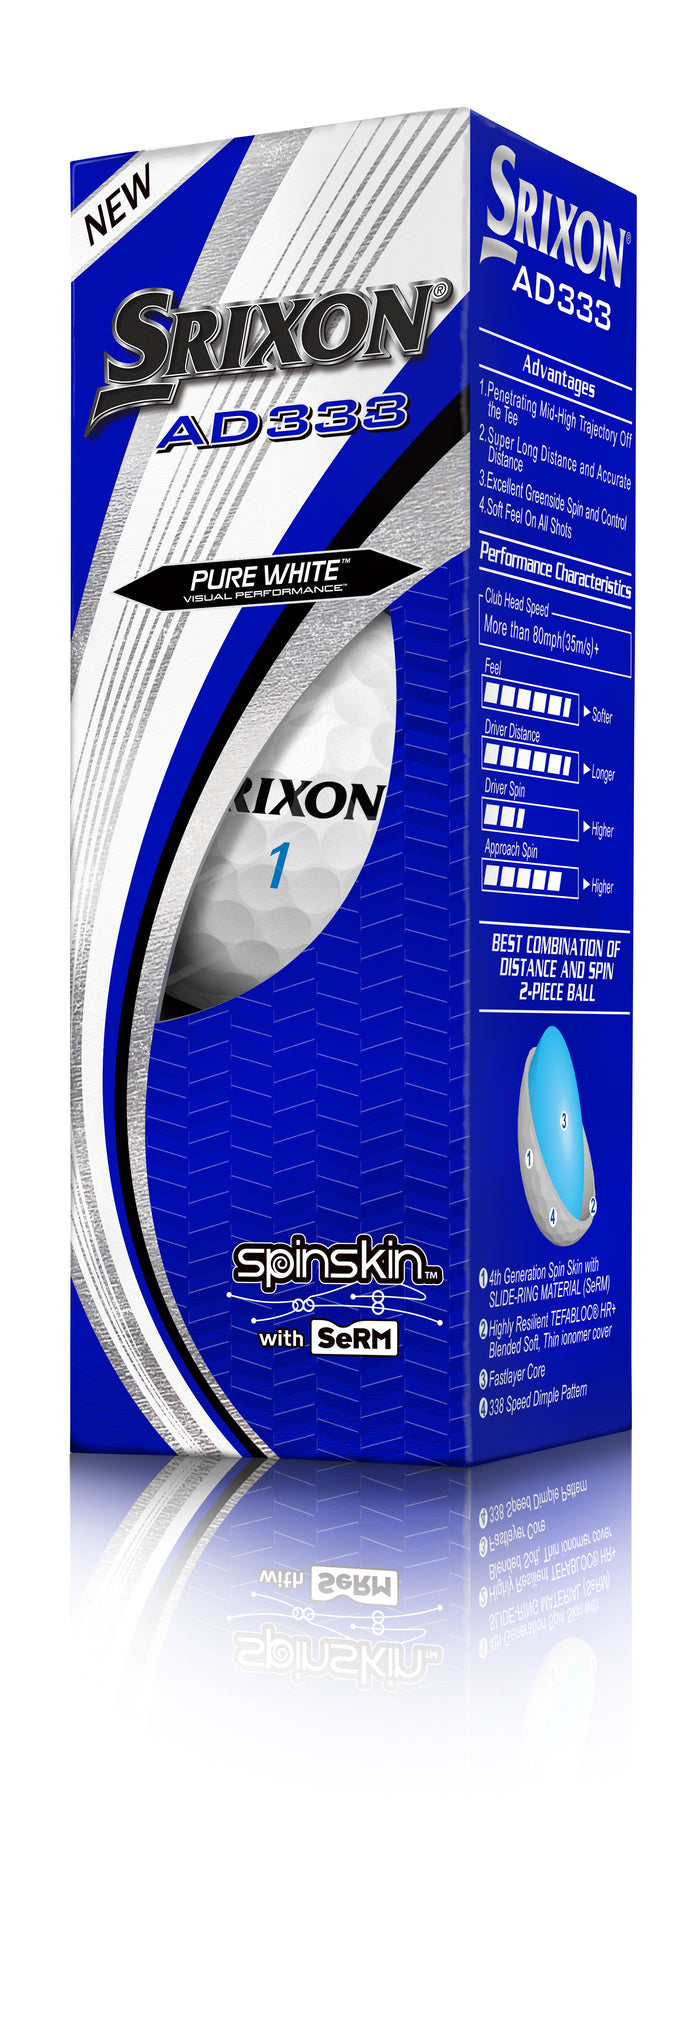 SRIXON AD333 SpinSkin 12 balles de golf blanches